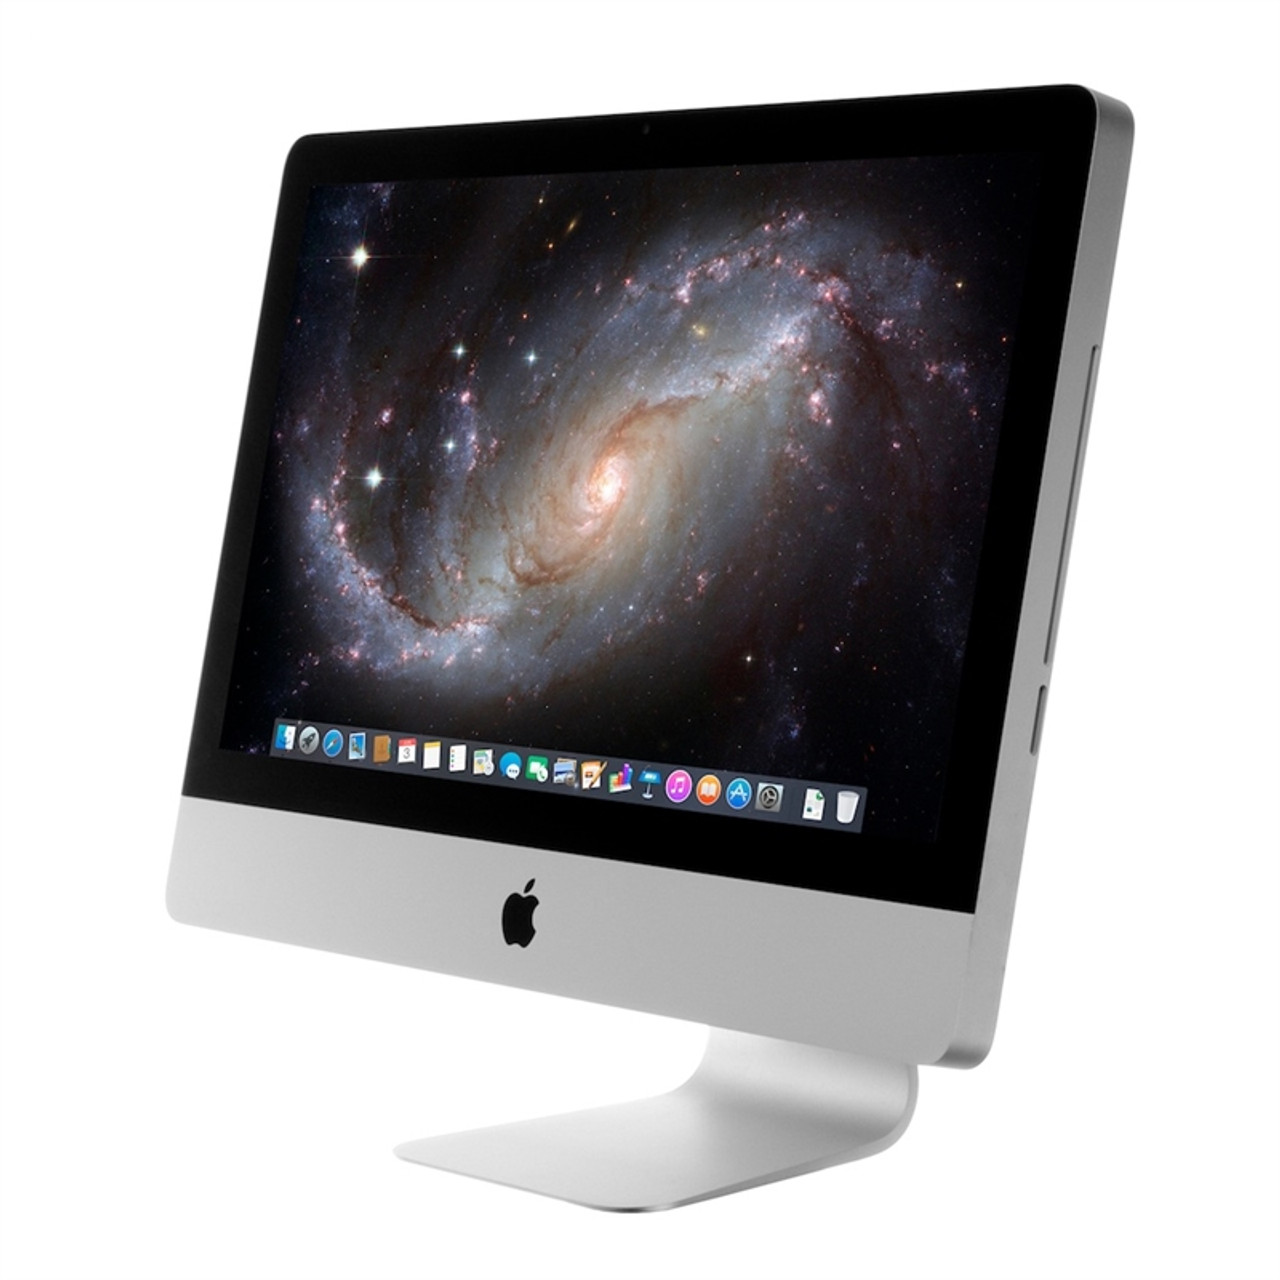 USB Port*: Apple iMac 21.5-inch 2.5GHz Quad-core i5 (Mid 2011